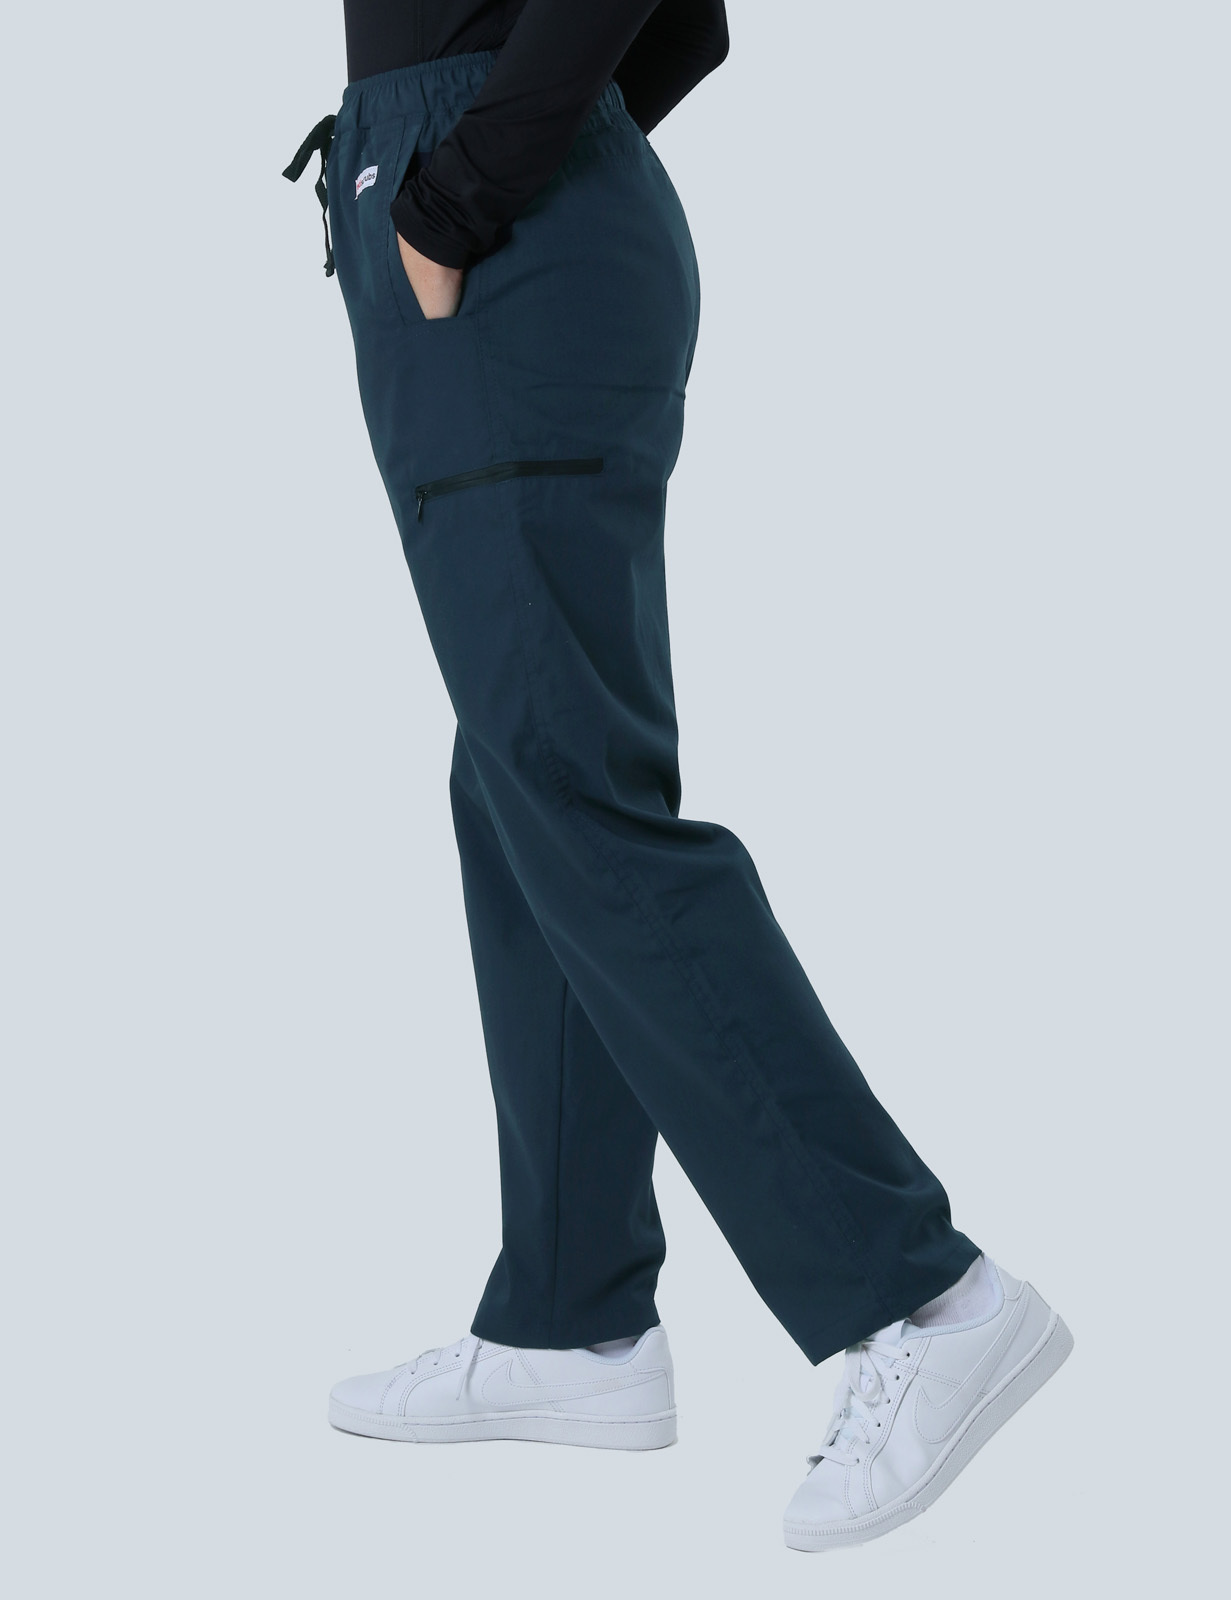 Women's Utility Pants - Navy - X Small